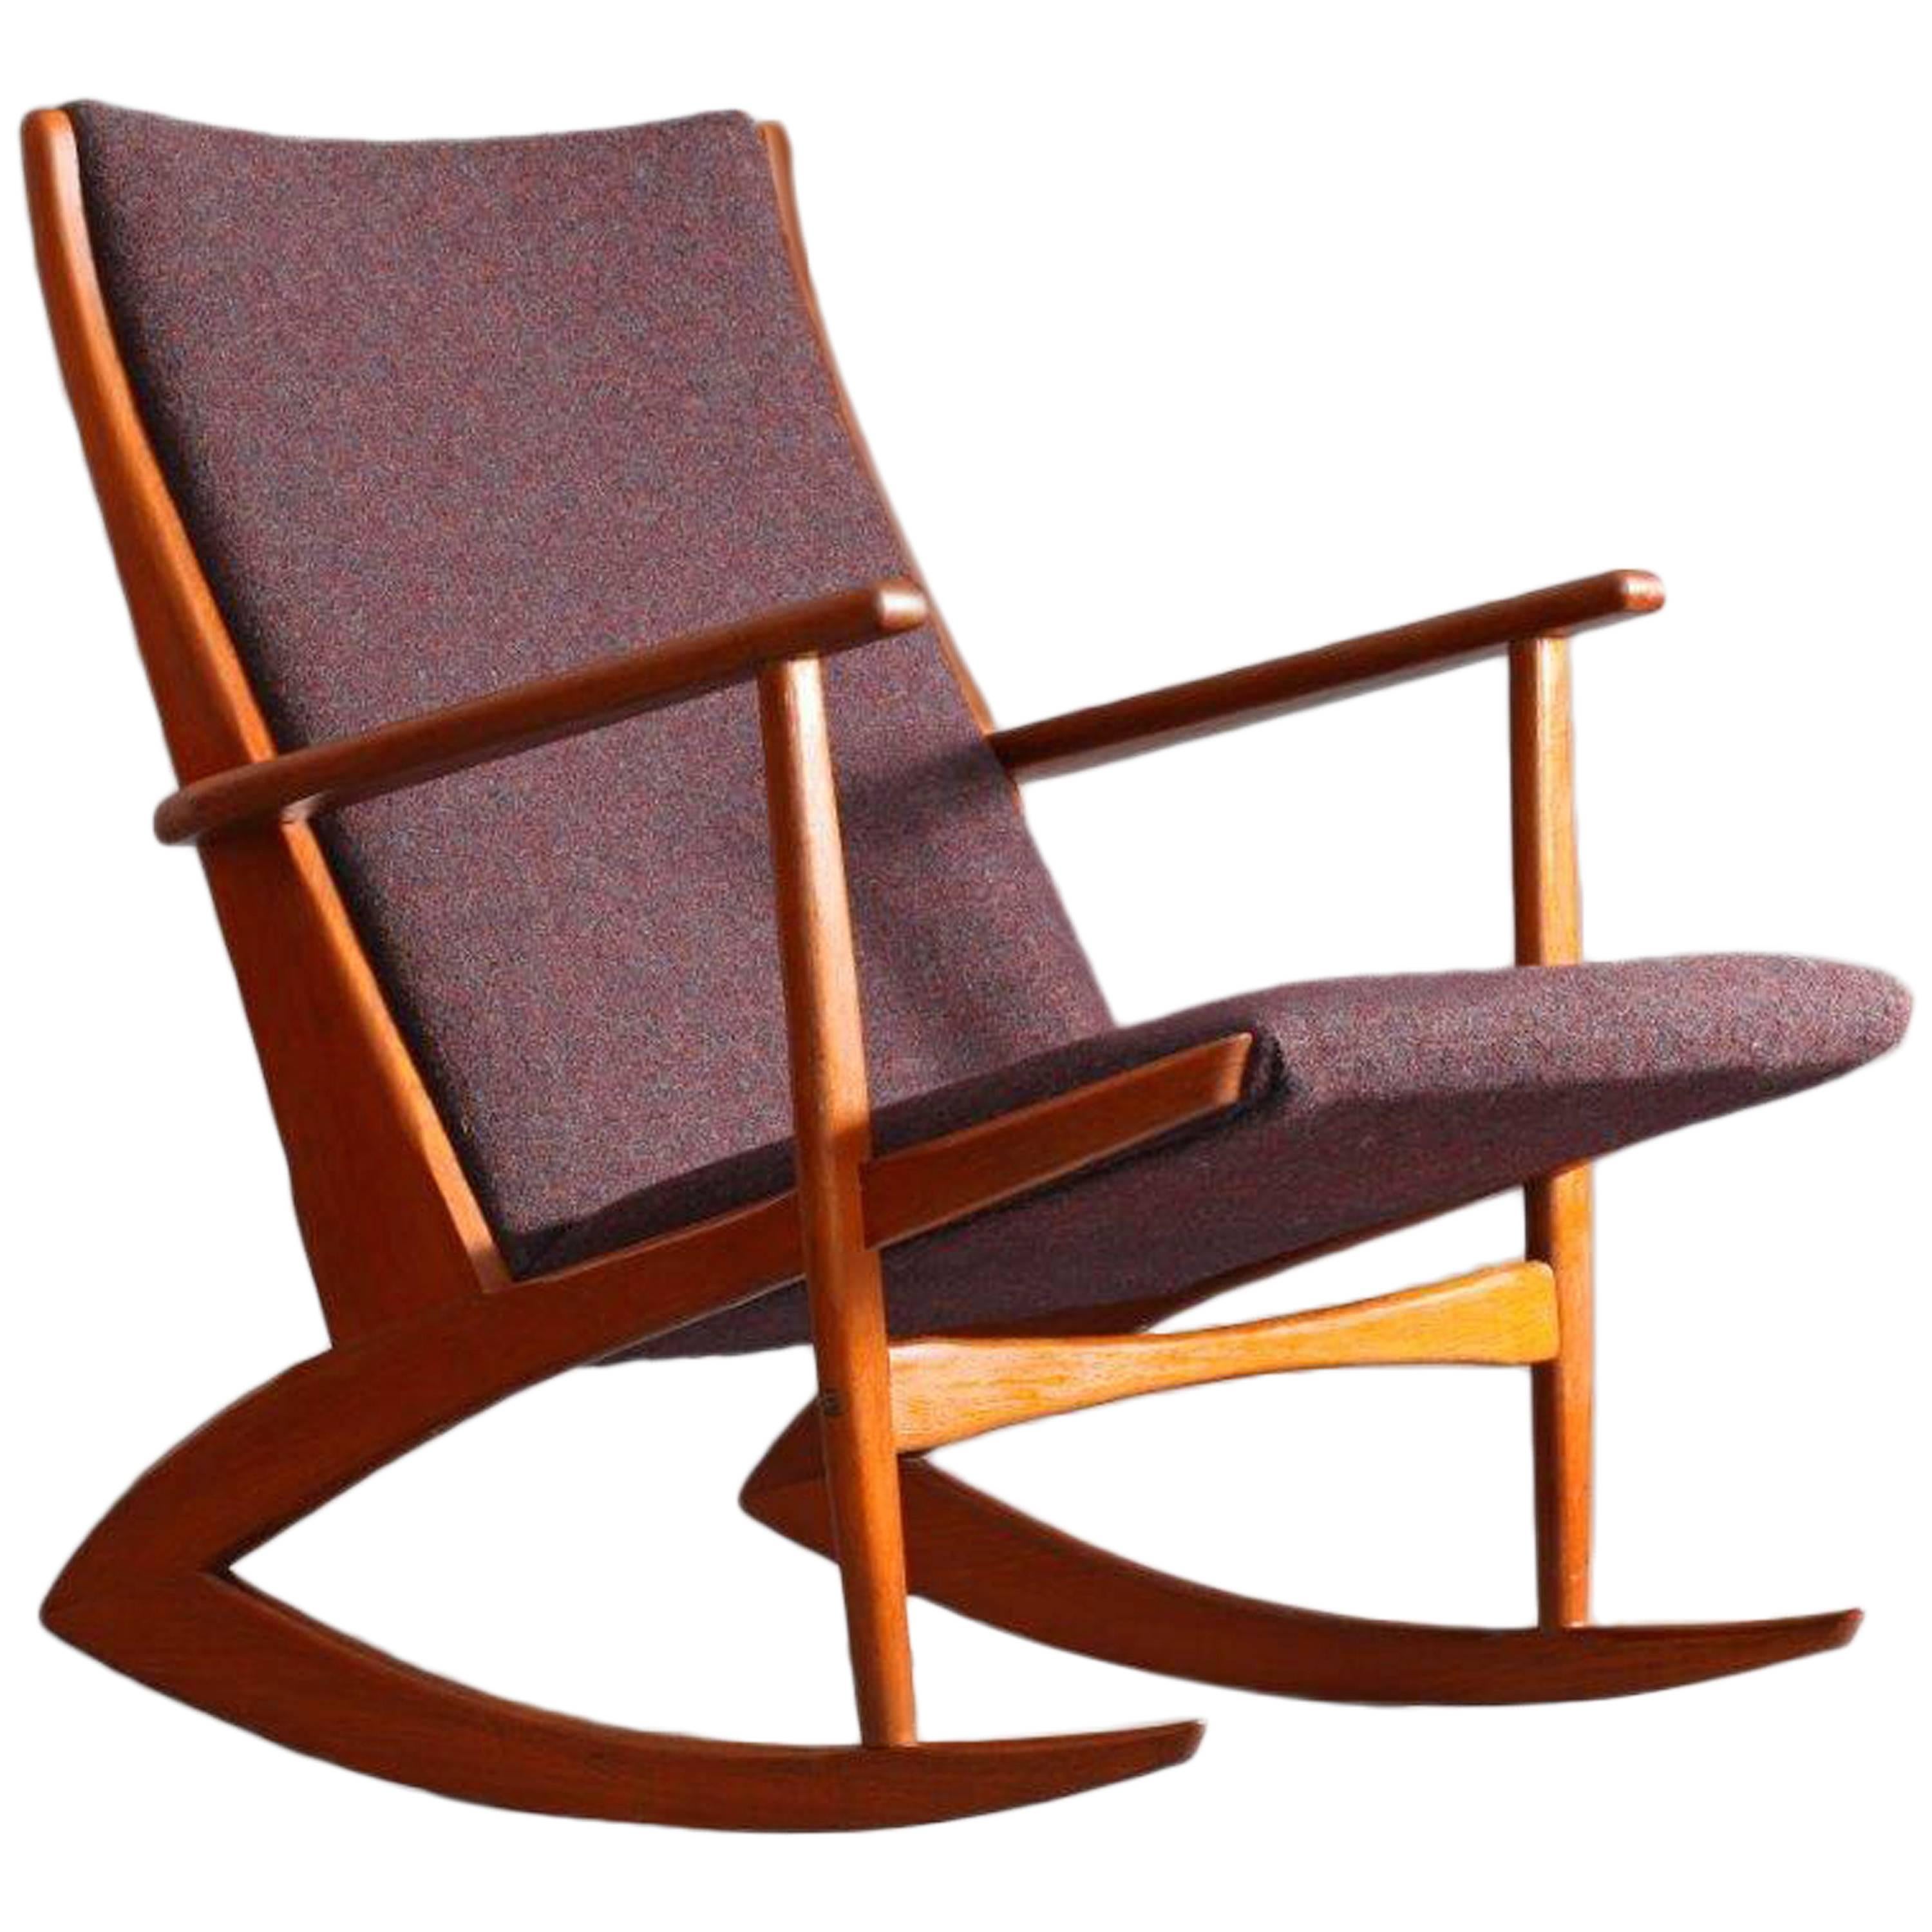 Rare Danish Teakwood Holger George Jensen Rocking Chair